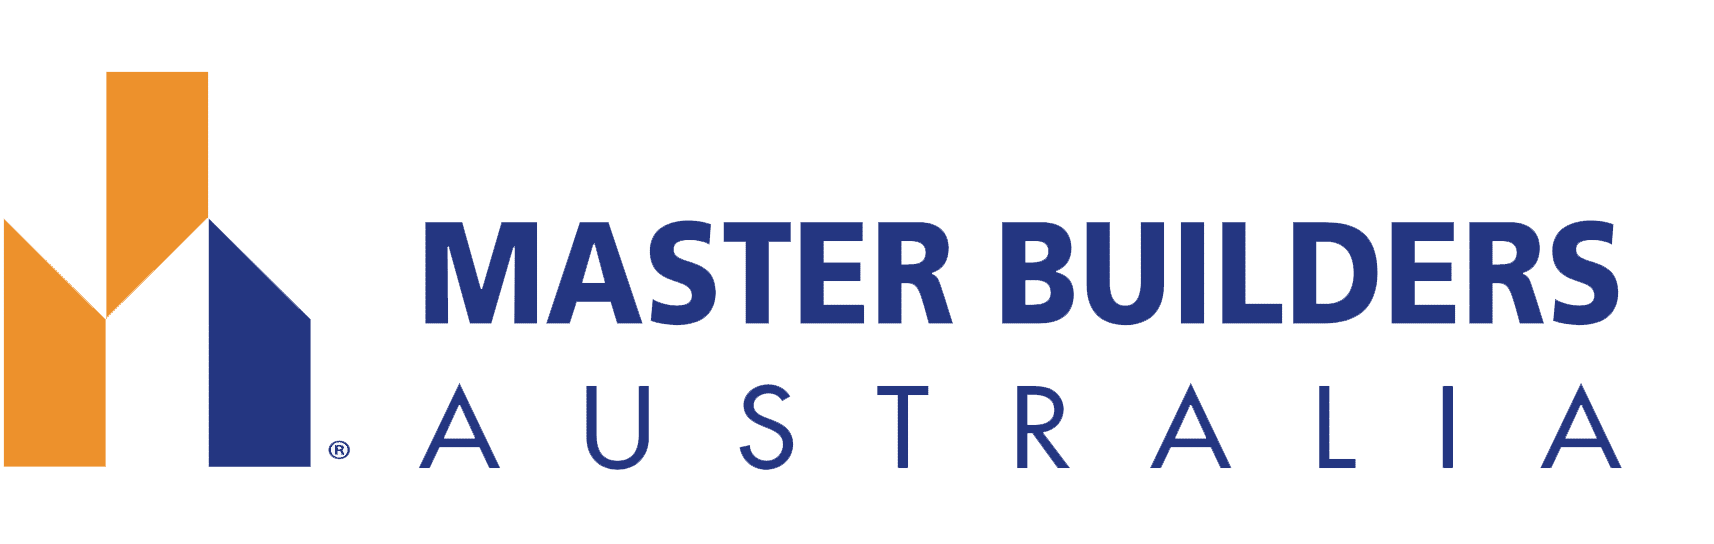 Master builders. Master Builders solutions ребрендинг. Master Builders solutions Россия. Master Builders solutions uk Ltd..